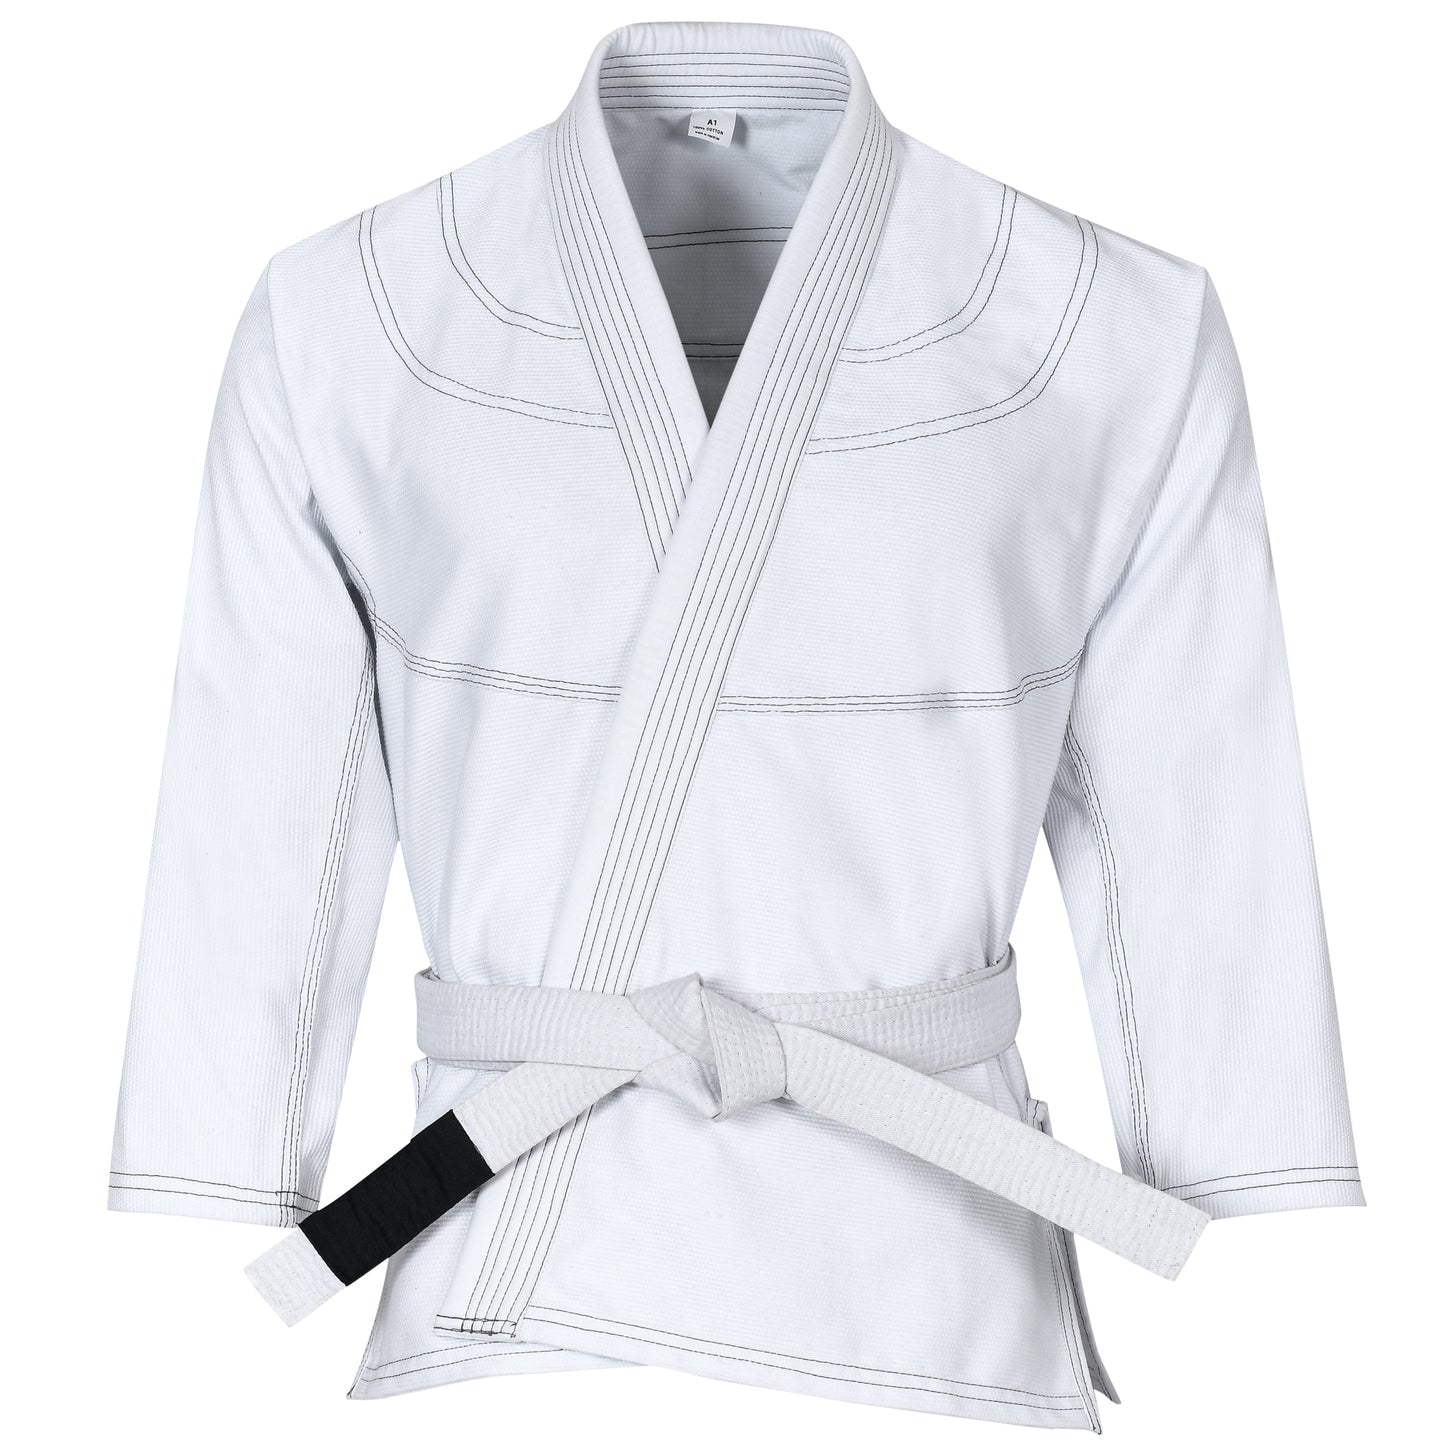 Brazilian Jiu Jitsu Gi for Kids Kimonos Medium Weight, Preshrunk with Free White Belt